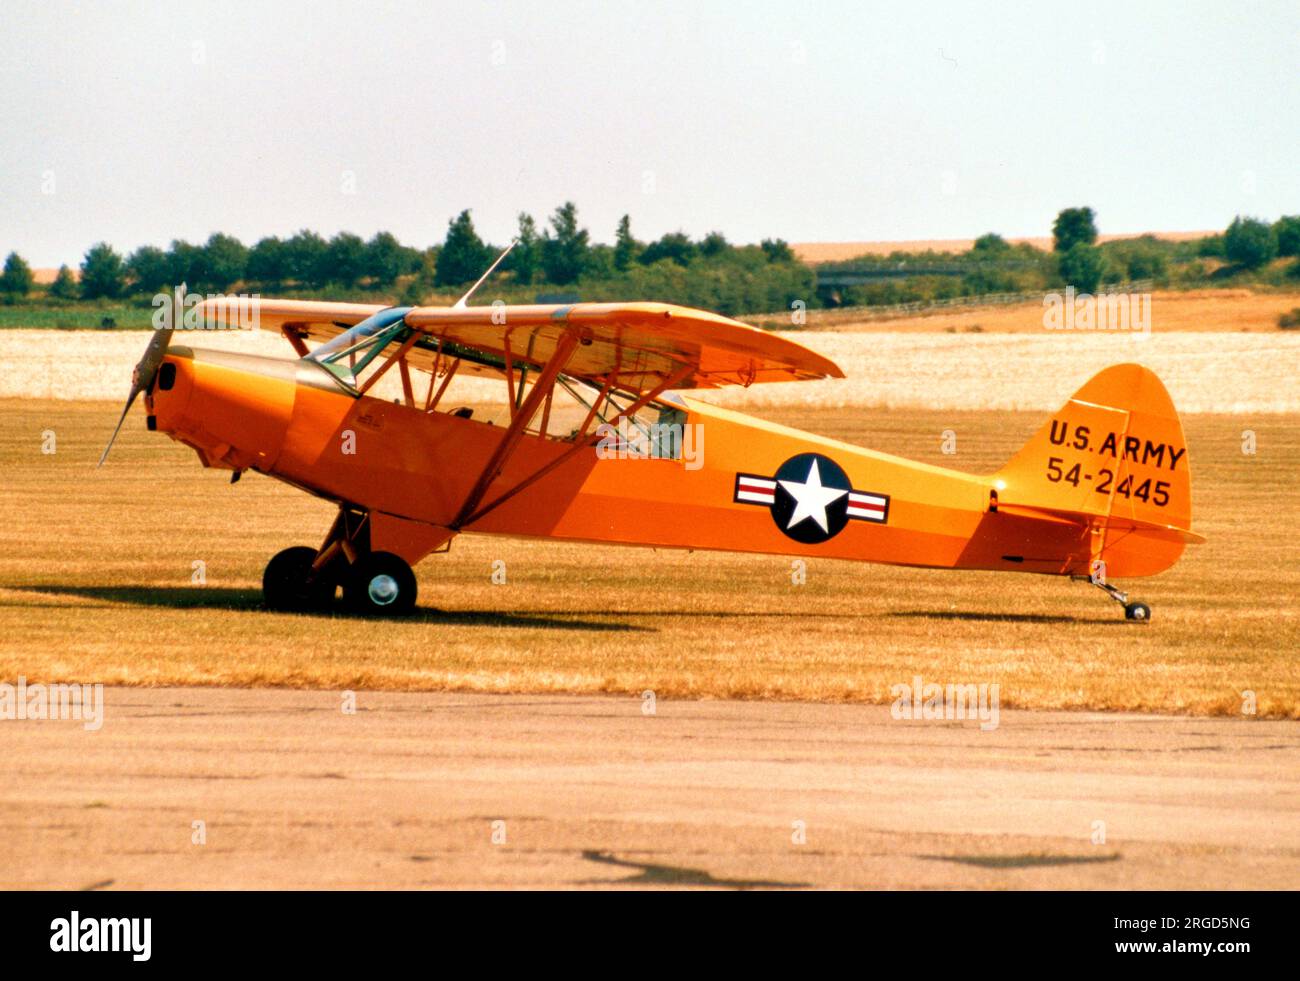 Piper L-21B-135 Super Cub G-OTAN - 54-2445 (msn 18-3845, ex R-155), seen fitted with the Whittaker Tandem Gear. Stock Photo